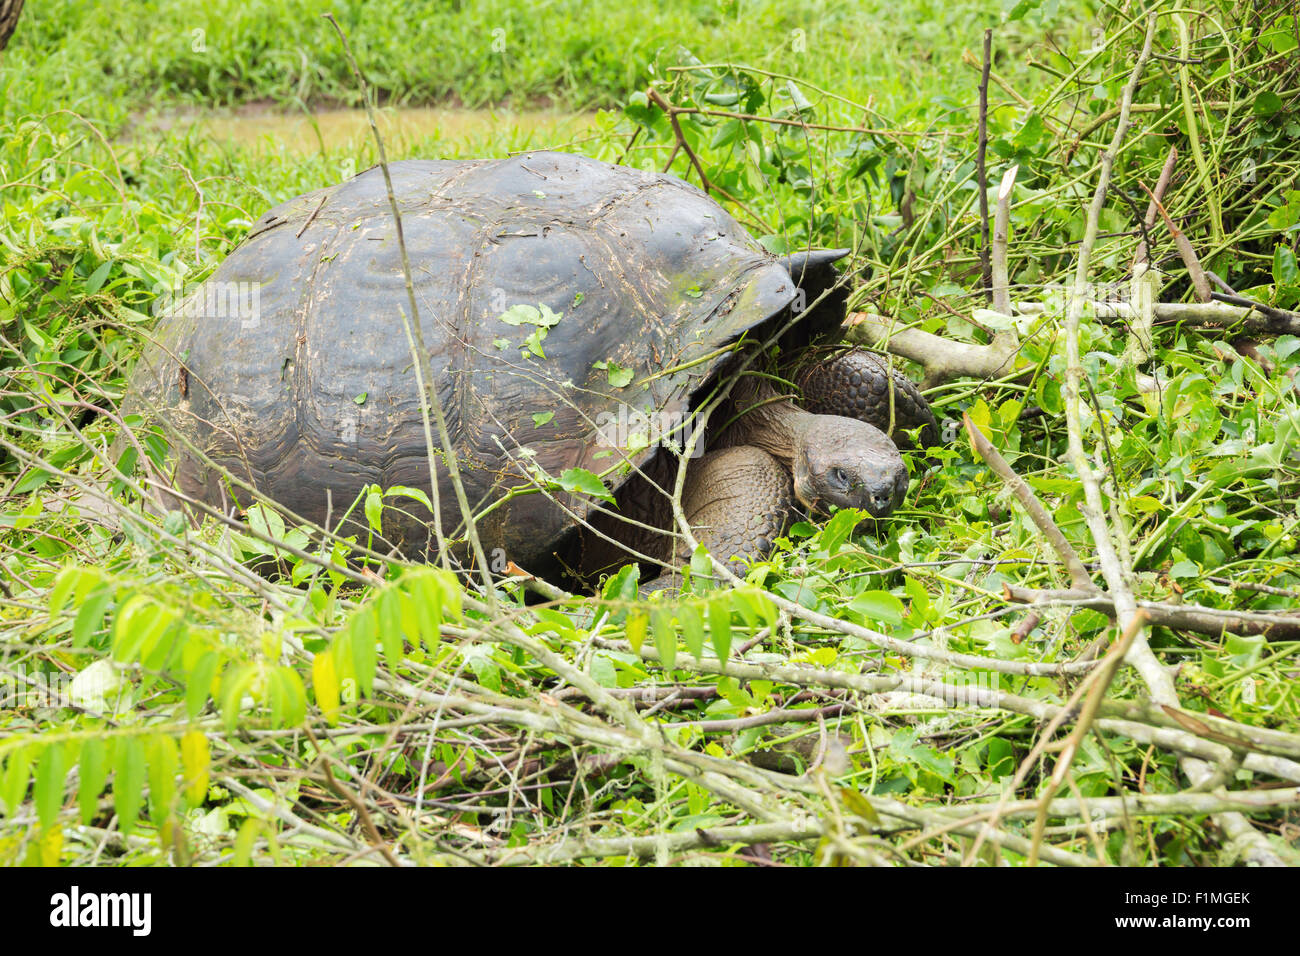 Giant galapagos tortoise making its way through the bushes. Stock Photo